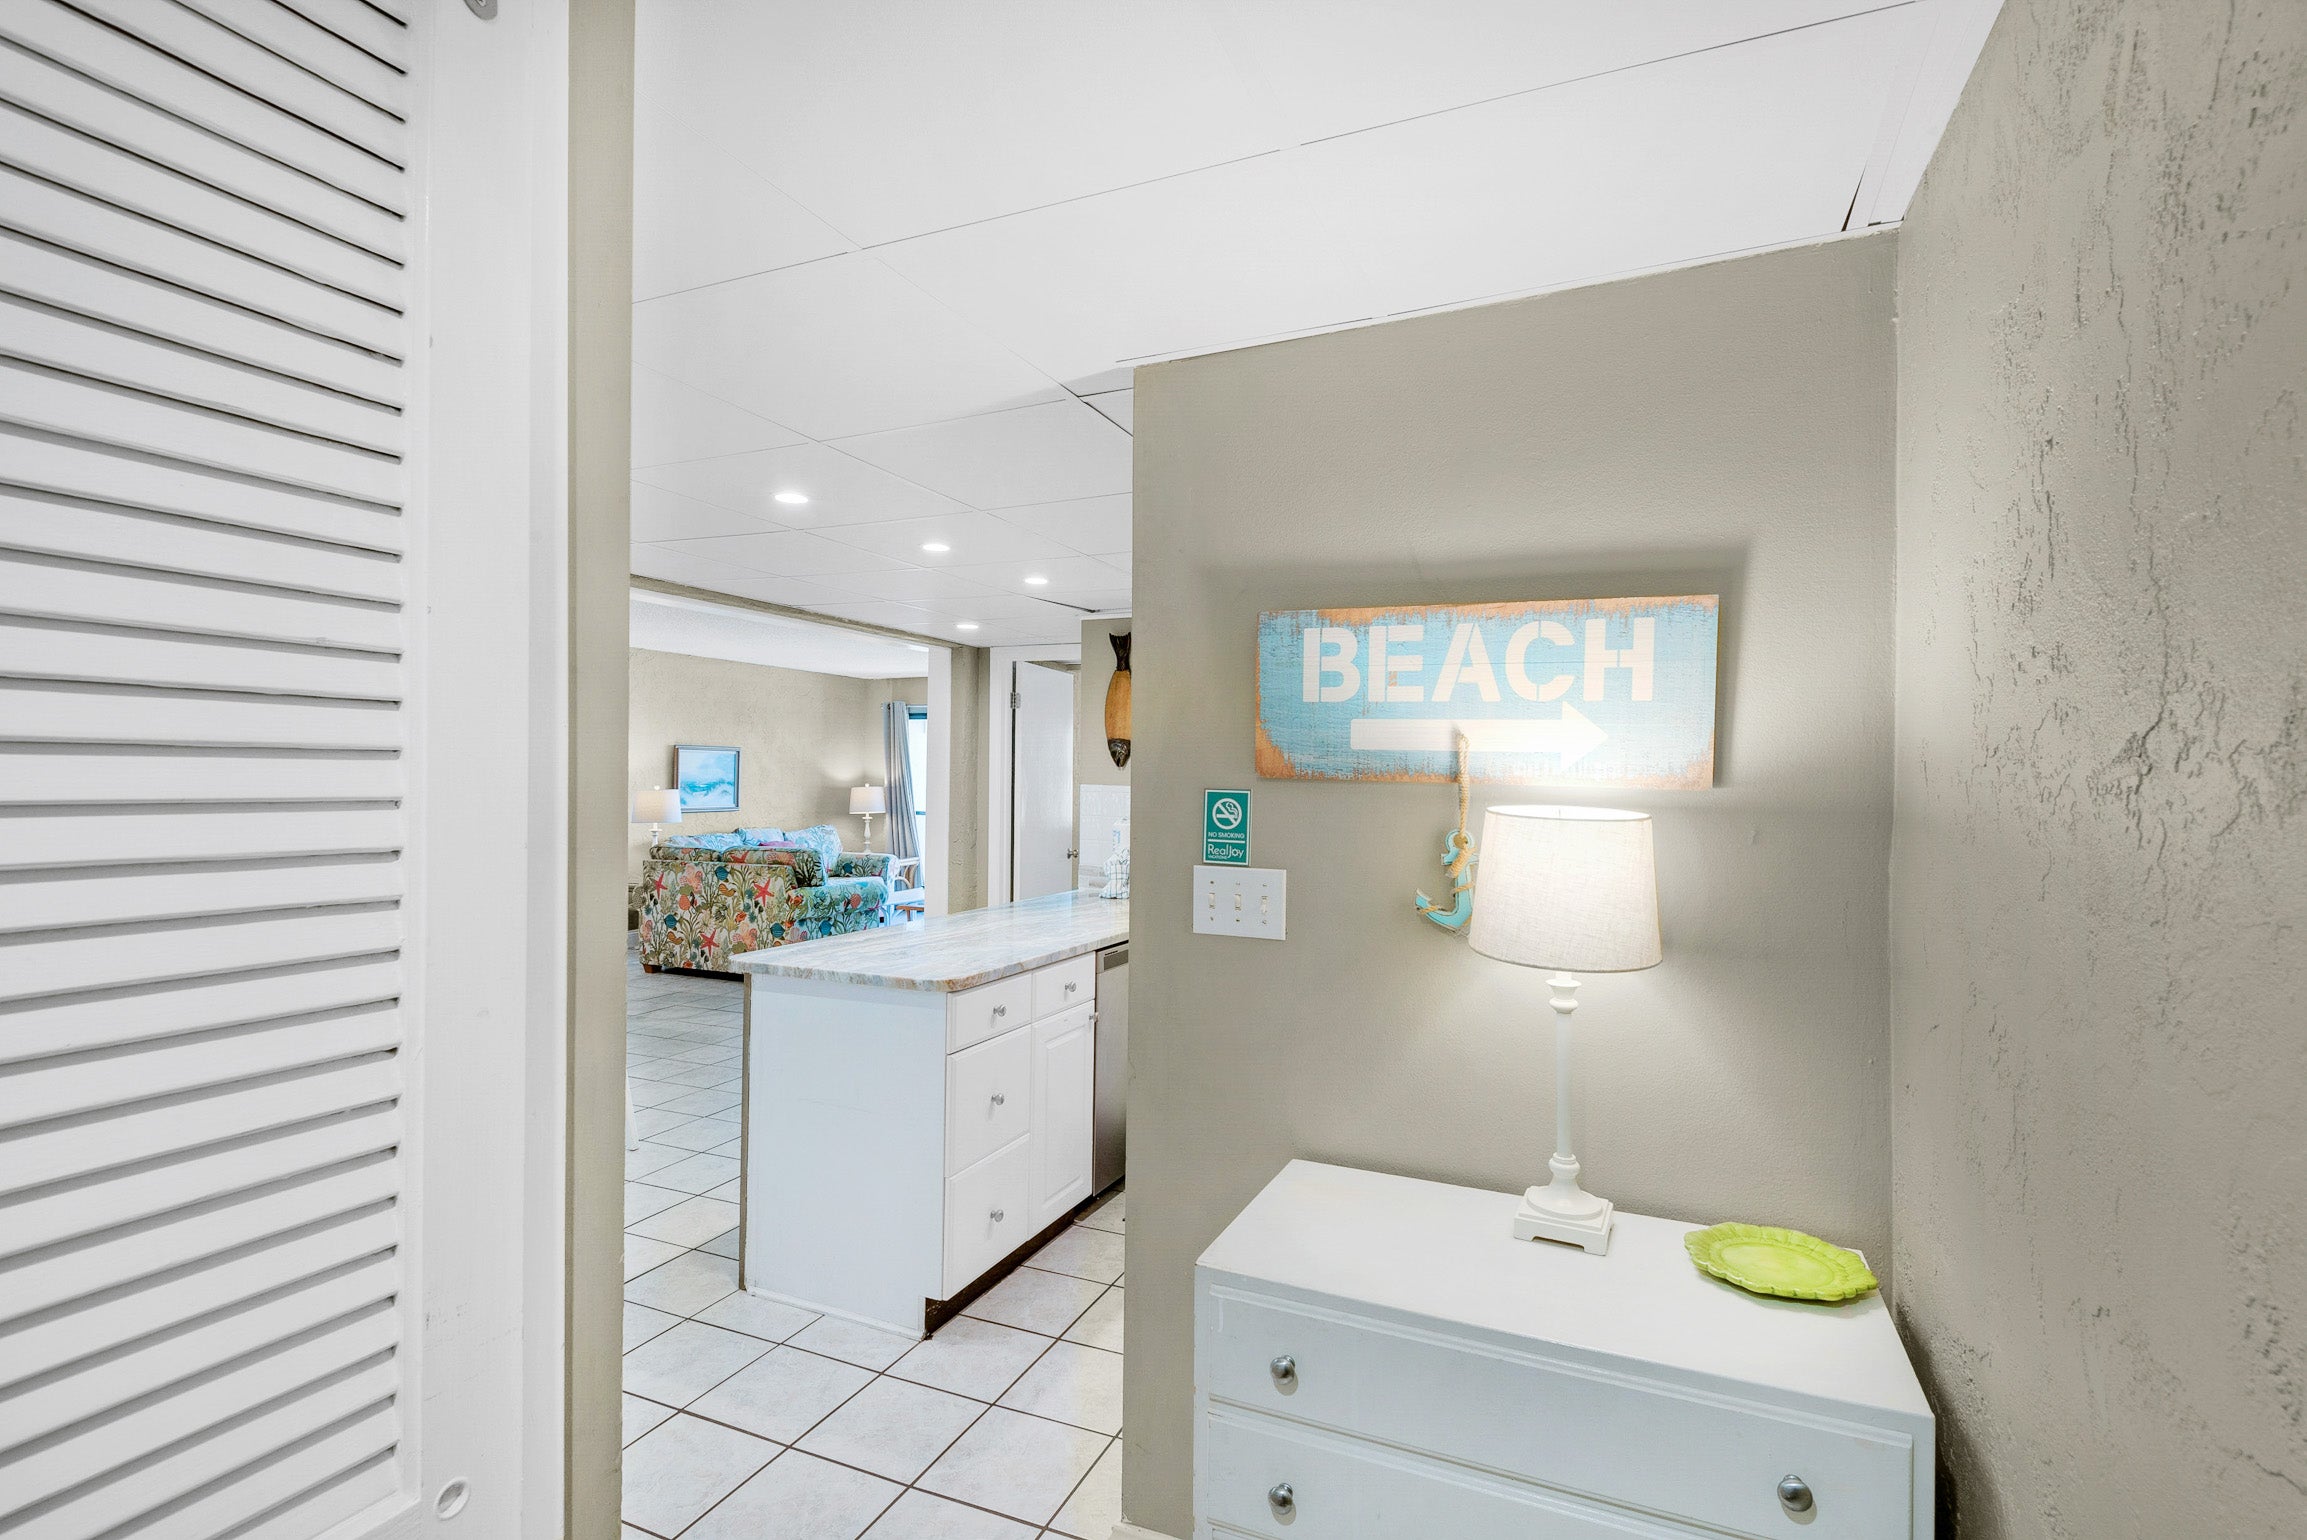 Entry to this beautiful 2 bedroom 2 bath condo at Sugar Beach